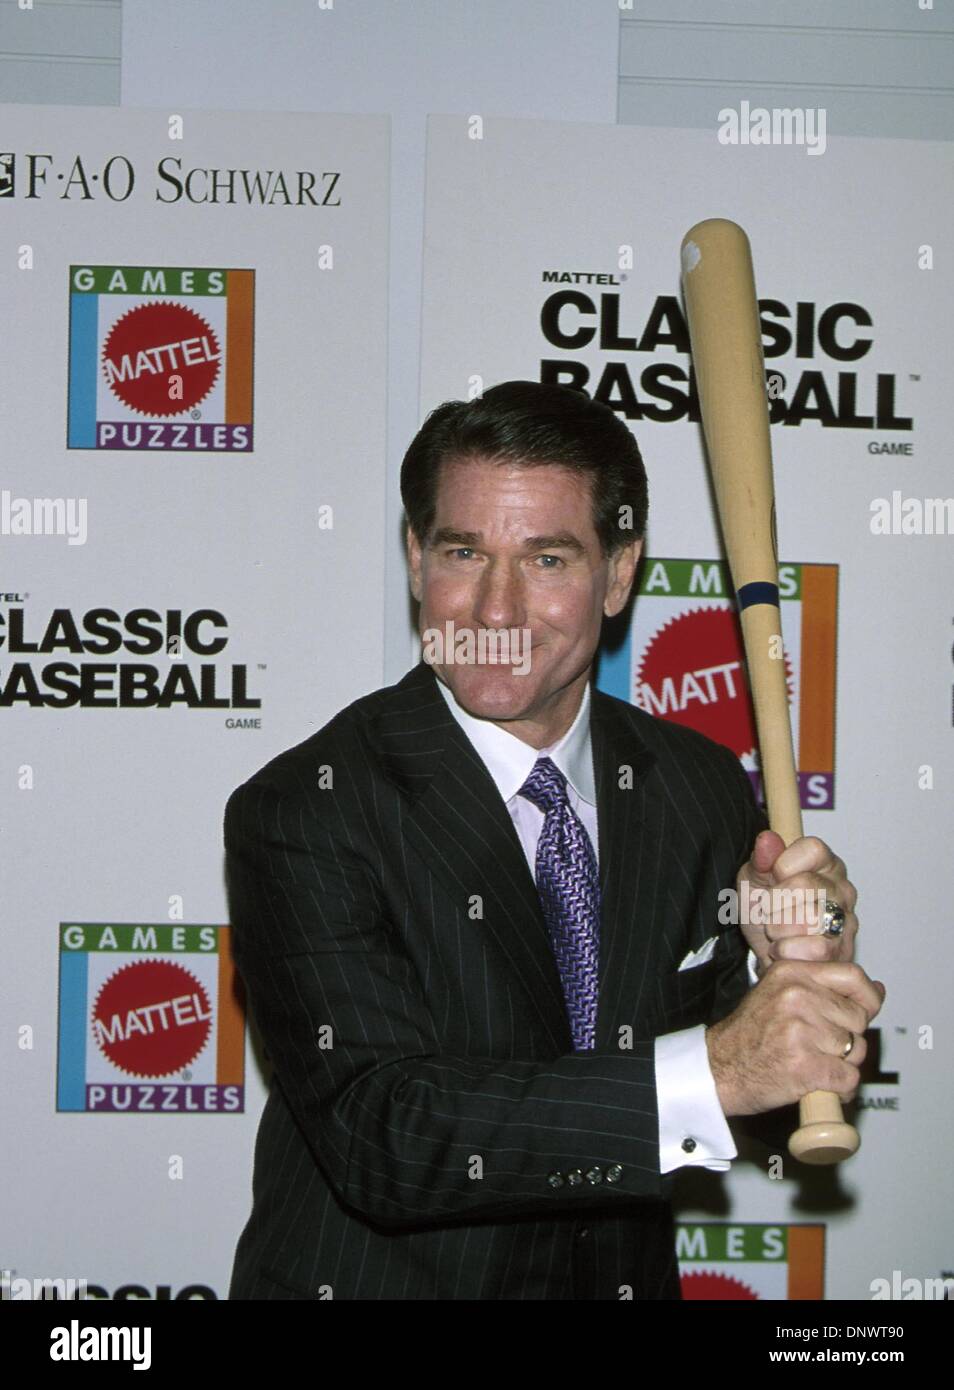 Reggie jackson baseball star hi-res stock photography and images - Alamy